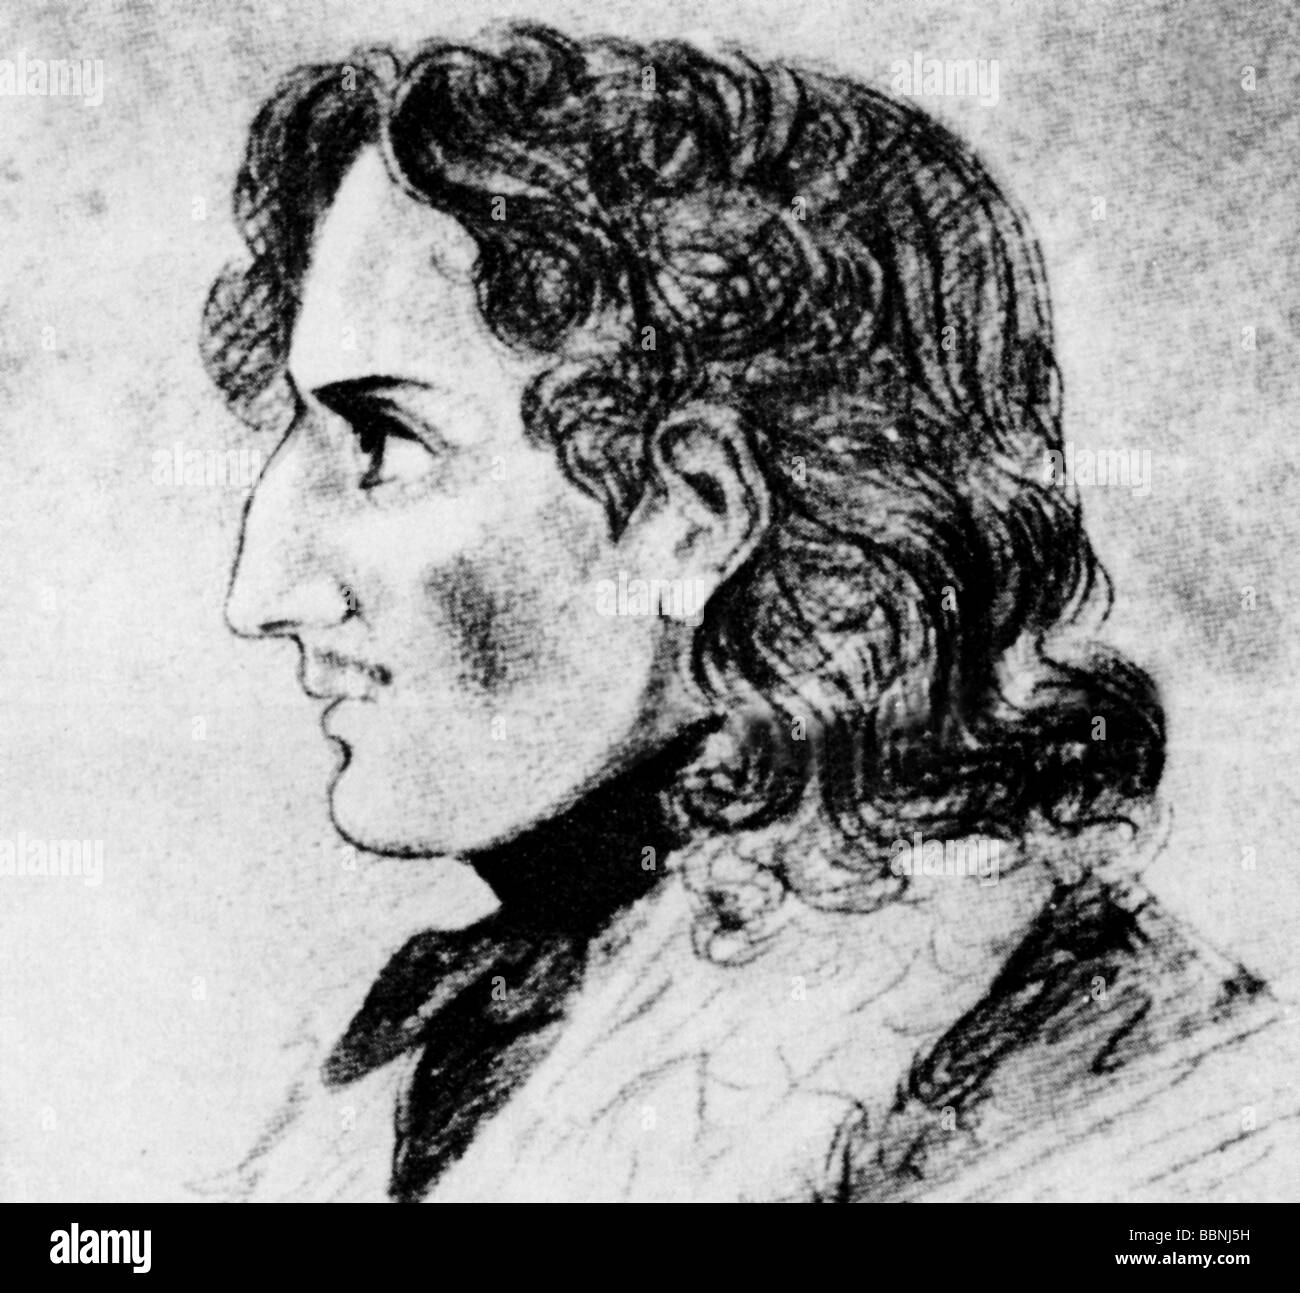 Mendelssohn-Bartholdy, Felix 3.2.1809 - 4.11.1847, German composer, portrait, after Johann Peter Leyser, 19th century, Stock Photo